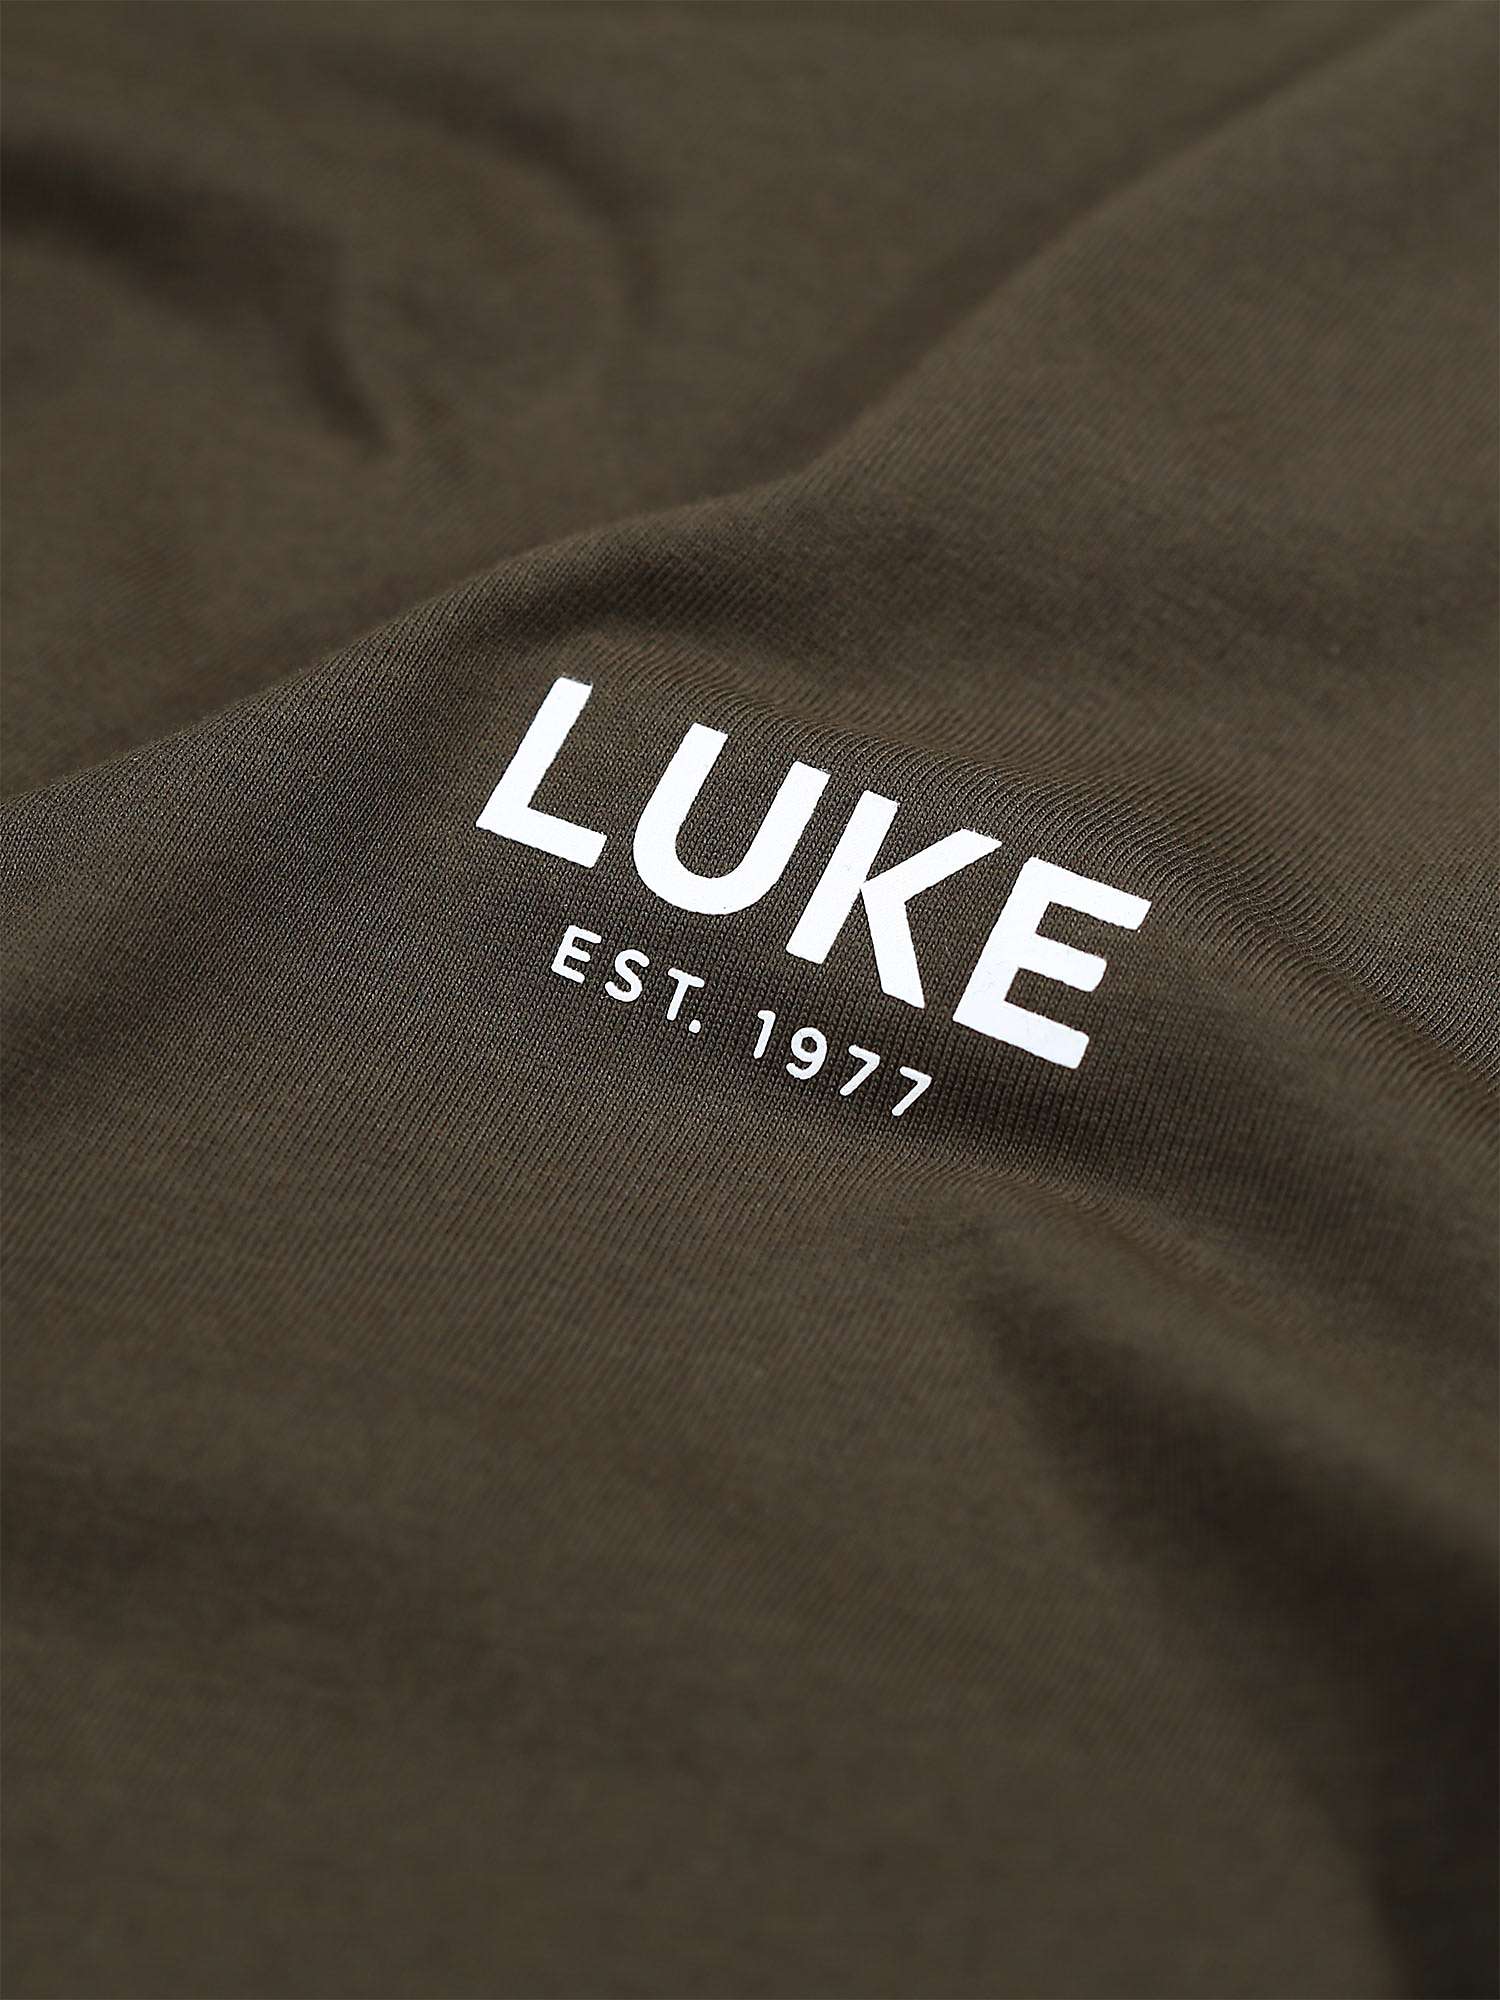 Buy LUKE 1977 Superb T-Shirt Online at johnlewis.com